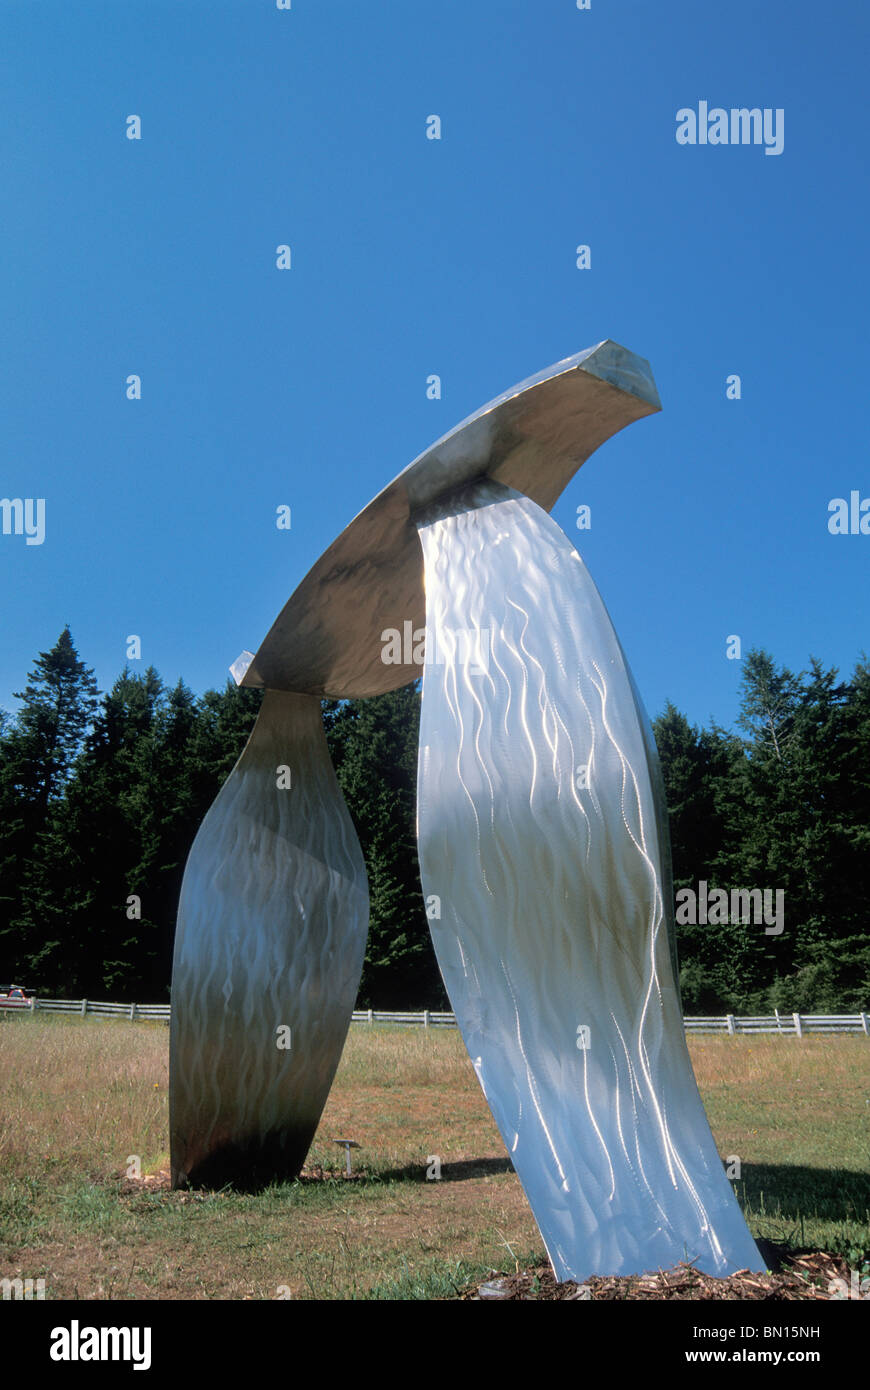 Metal sculpture by artist Micajah Bienvenu at Westcott Bay Sculpture Park, San Juan Island, Washington. Stock Photo